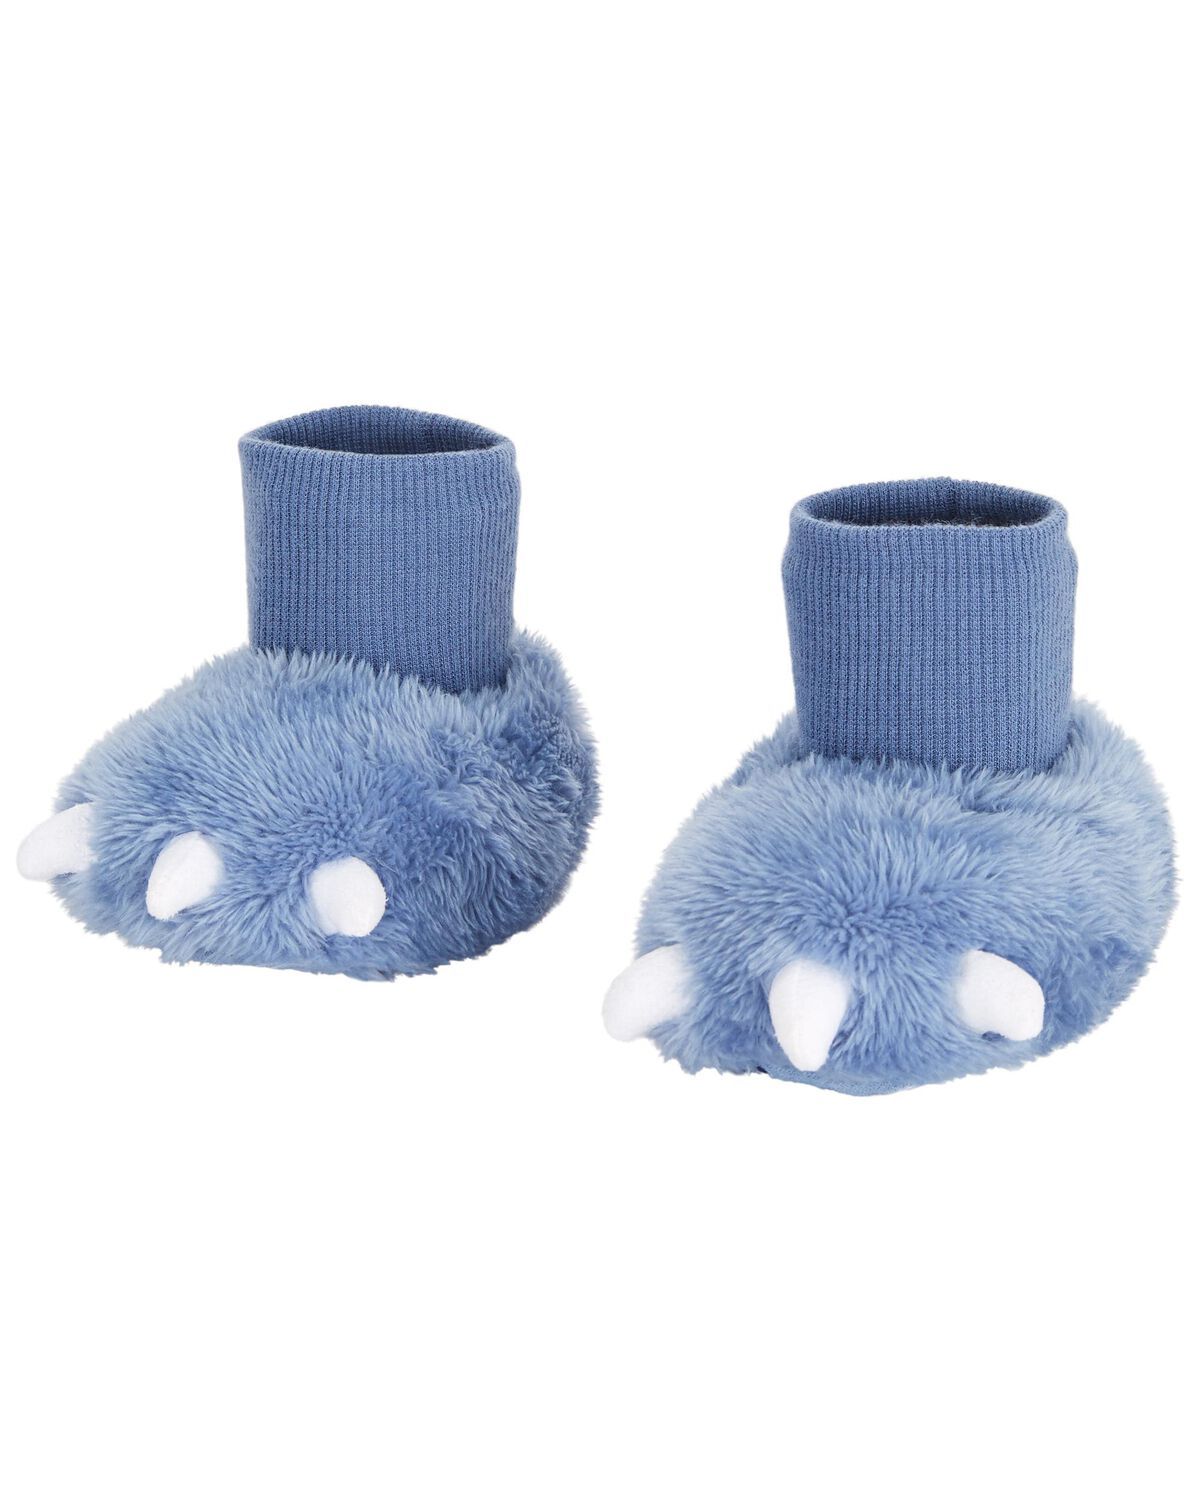 Blue Baby Dinosaur Soft Slippers | carters.com | Carter's